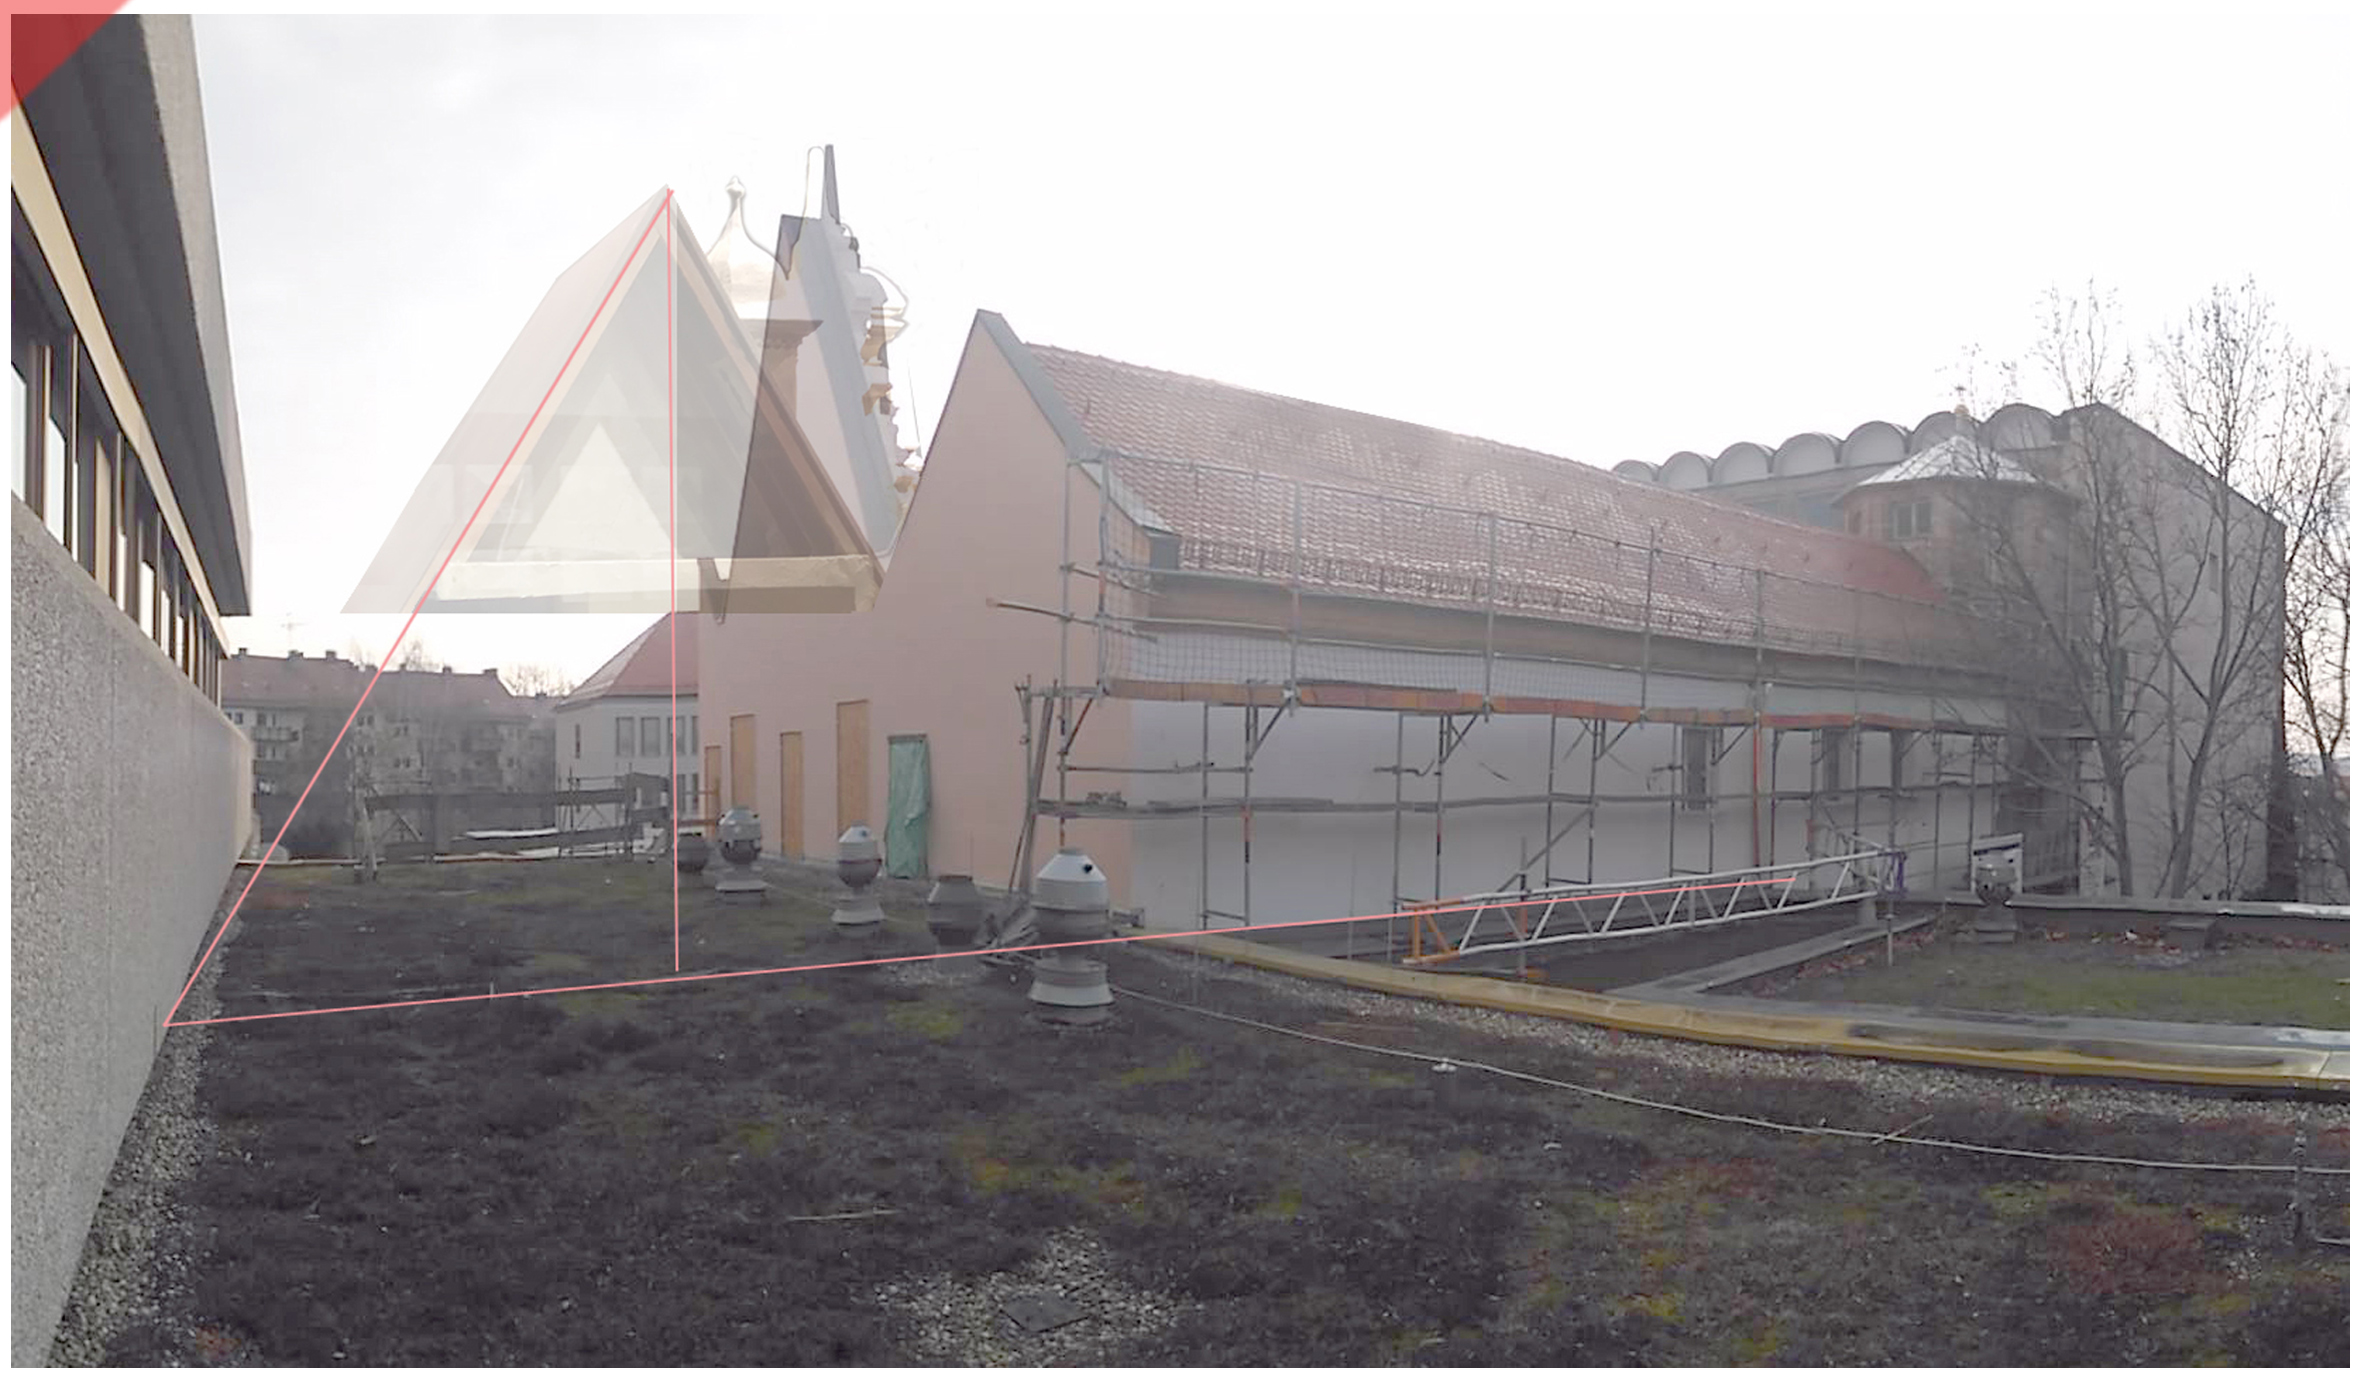 Pellerhaus-Nordgiebel-Innenhof-Dach-Panorama-Hof-Rekonstruktion-Fassade-2019